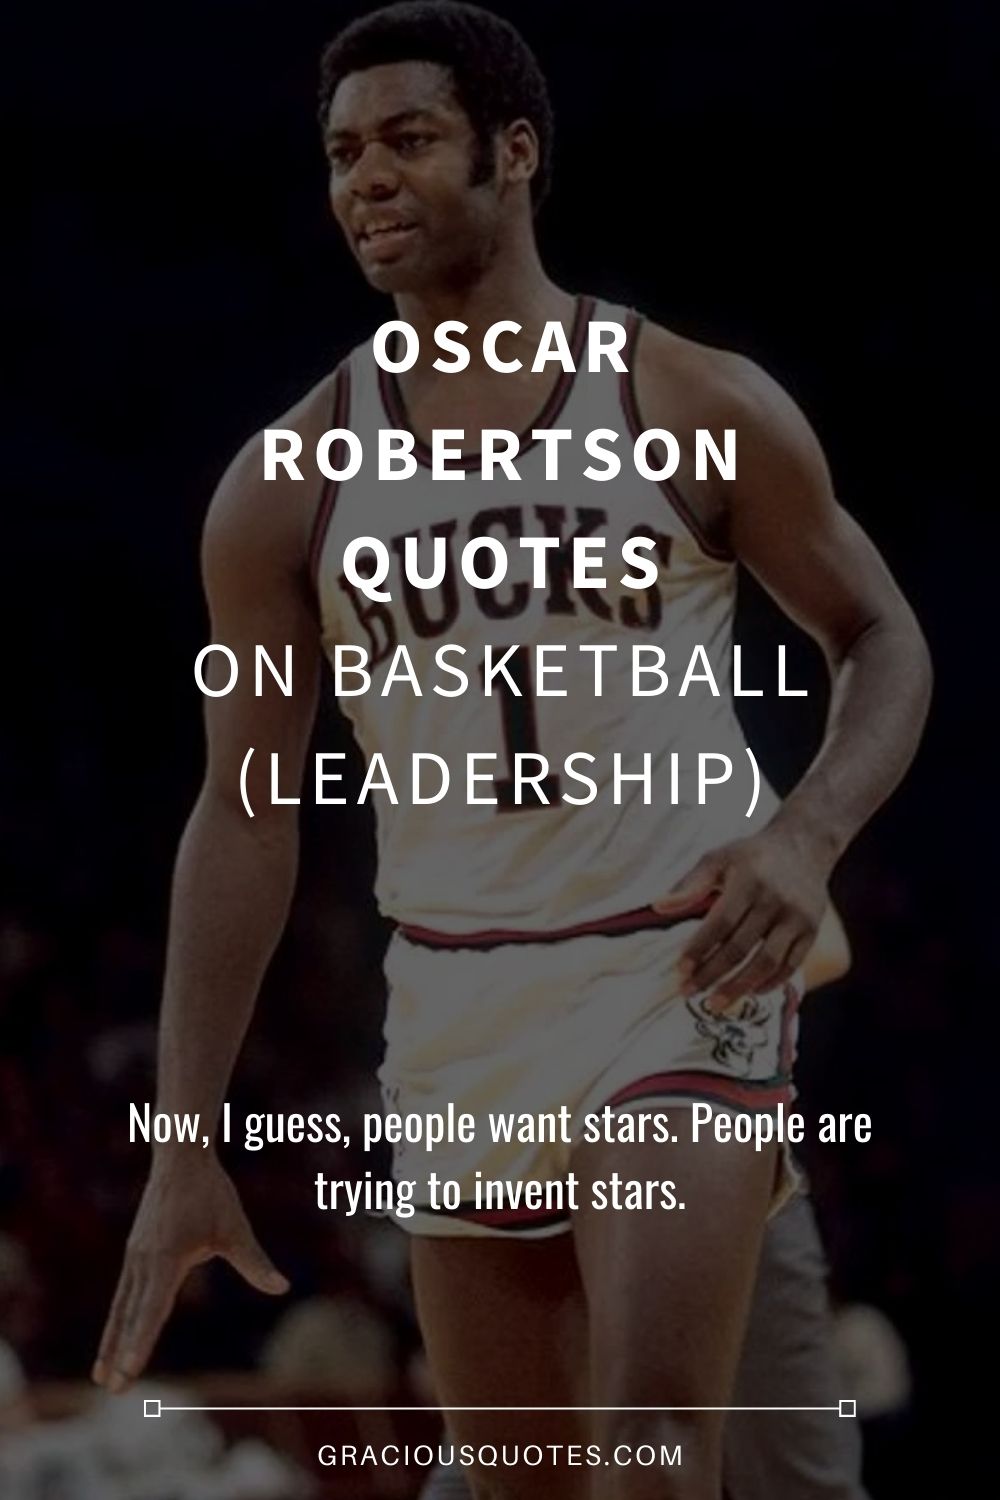 Oscar Robertson Quotes on Basketball (LEADERSHIP) - Gracious Quotes